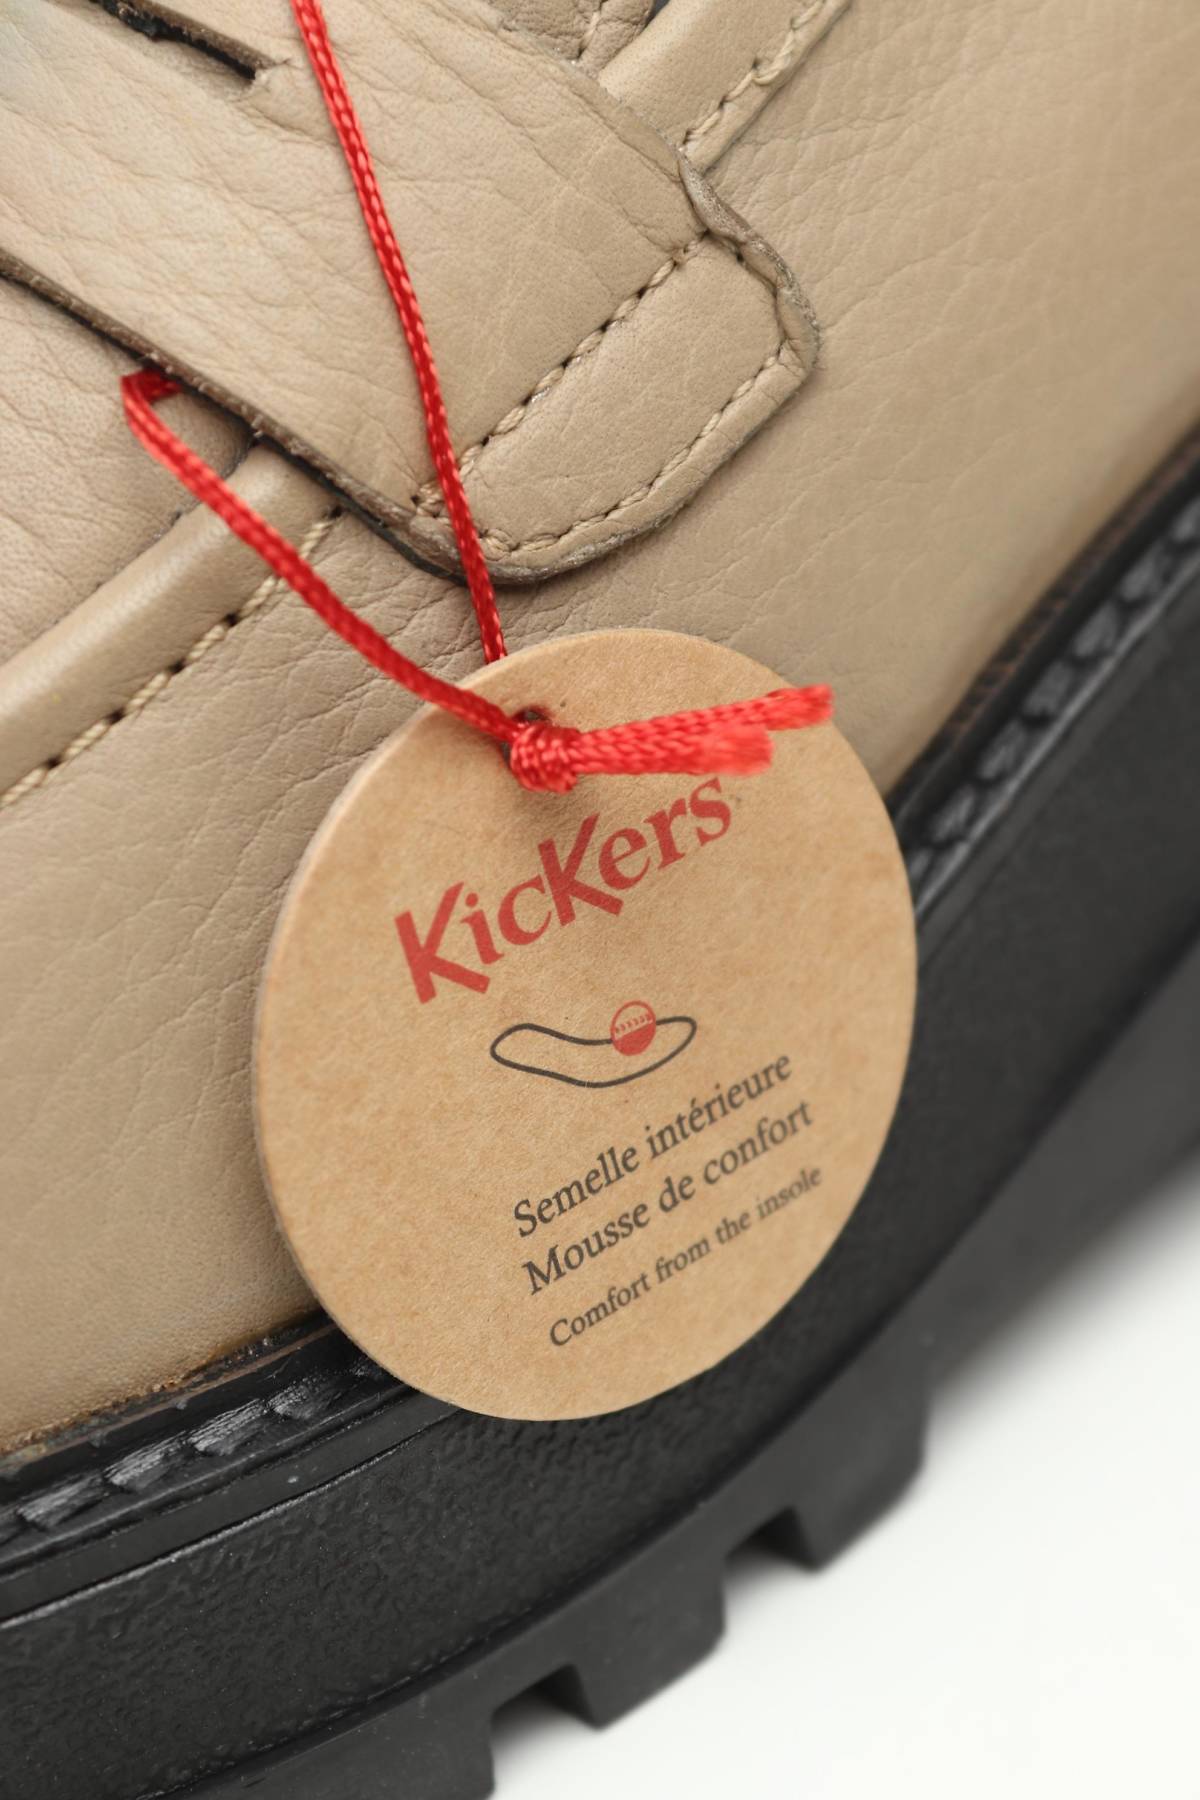 Дамски обувки Kickers5